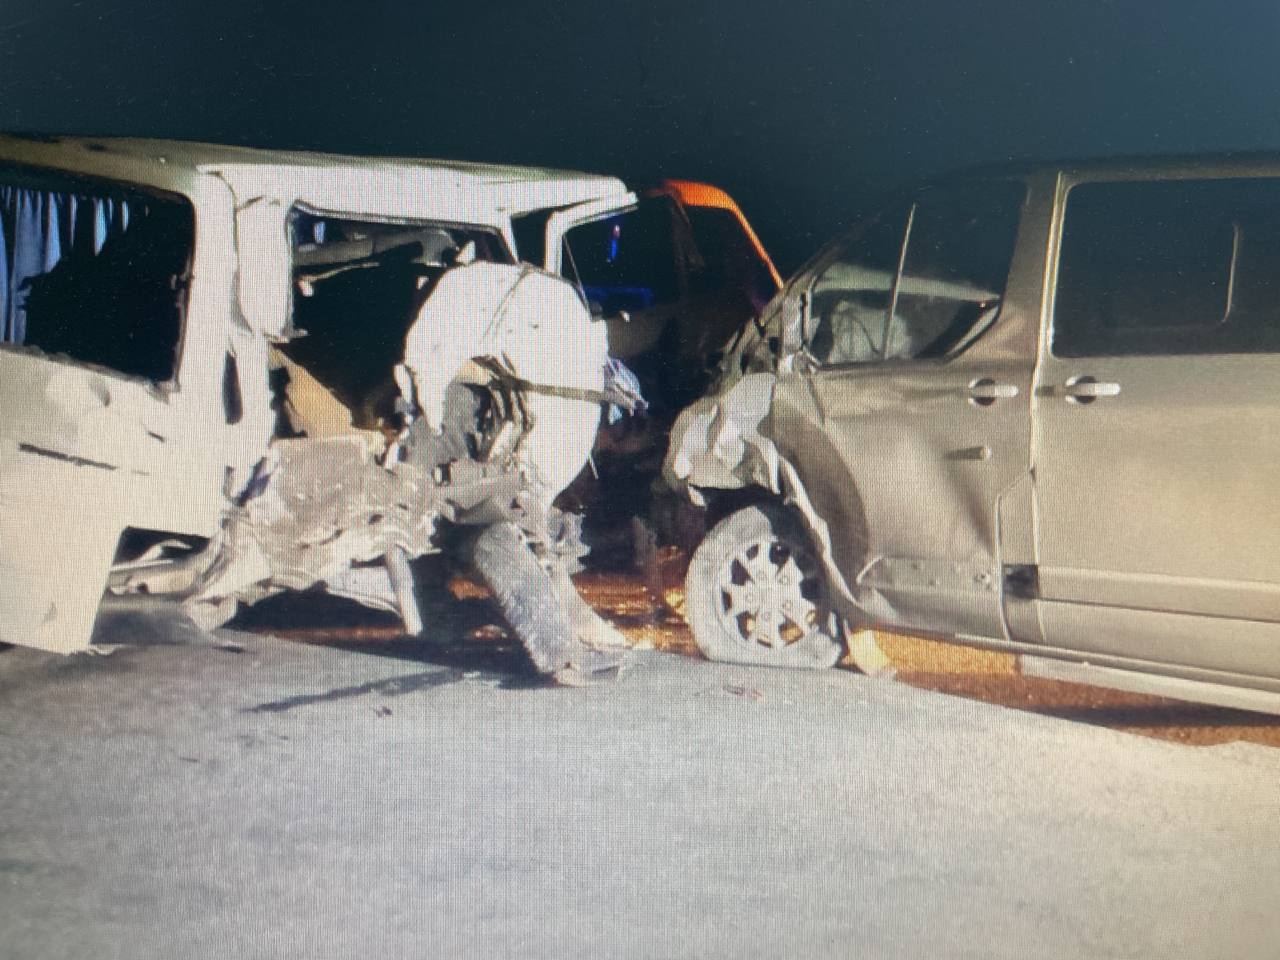 Появились подробности аварии на М7 с пассажирами BlaBlaCar